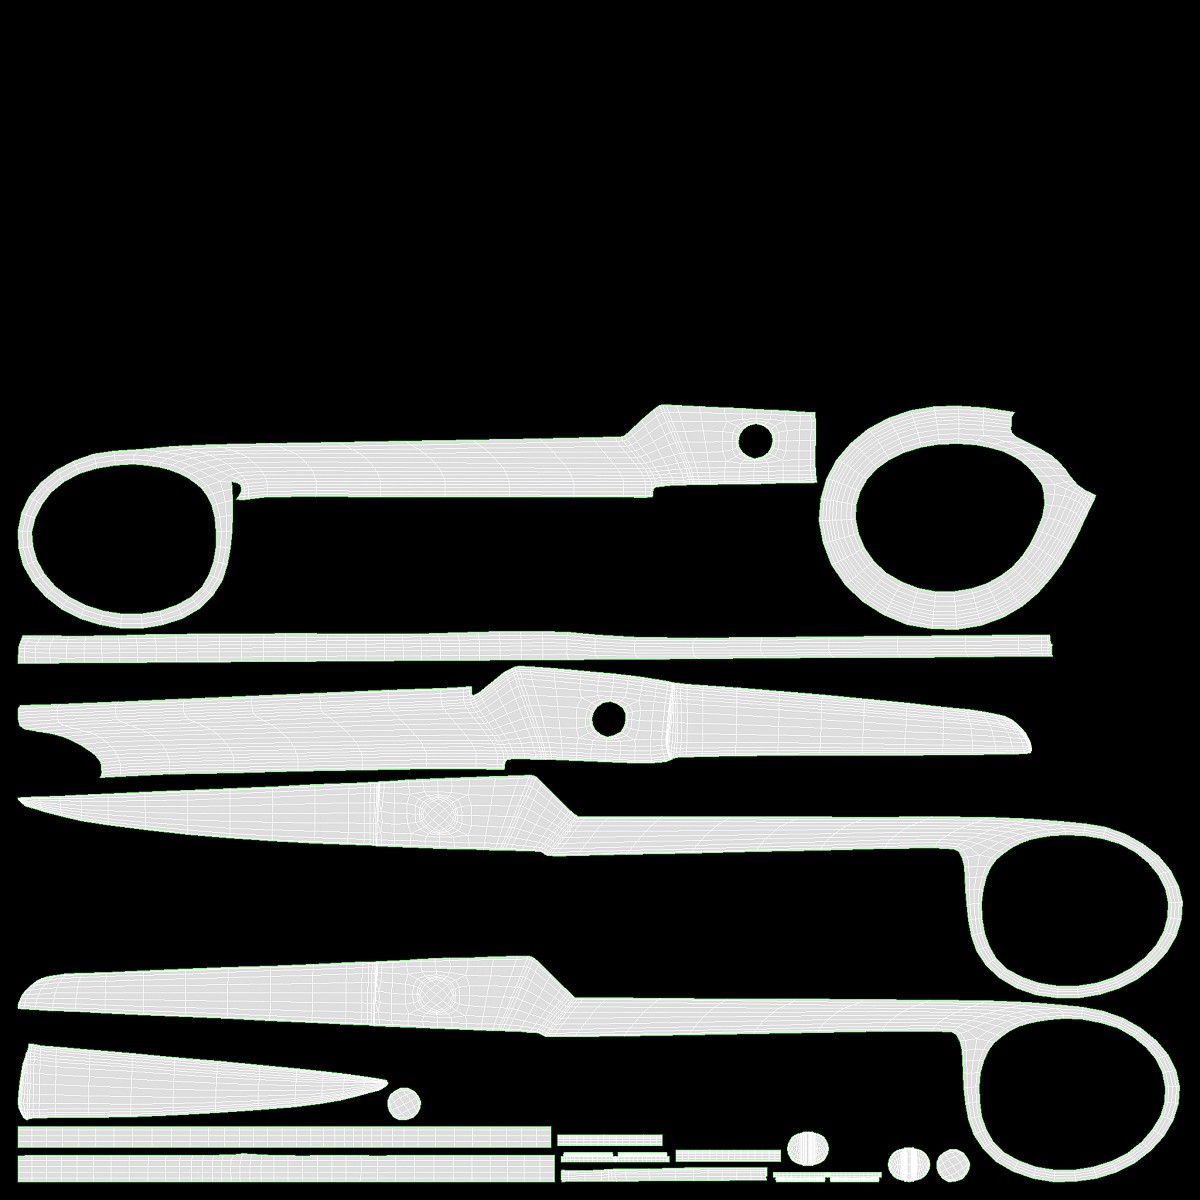 Operating Scissors Surgical Instrument